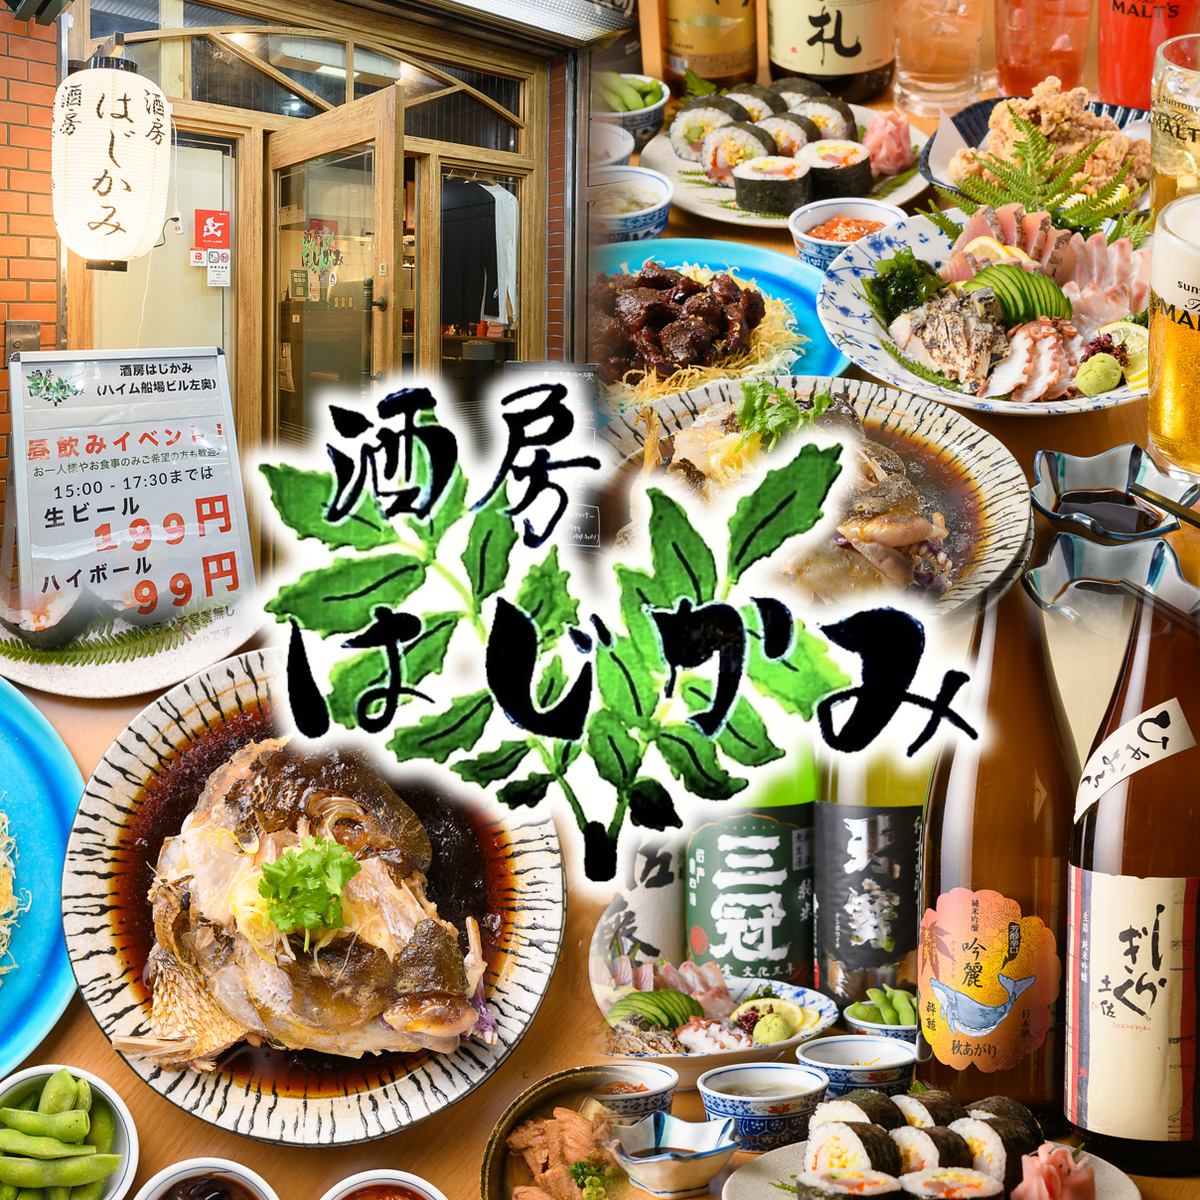 “Sakabo Hajikami” is a cozy izakaya with delicious food at a great price.